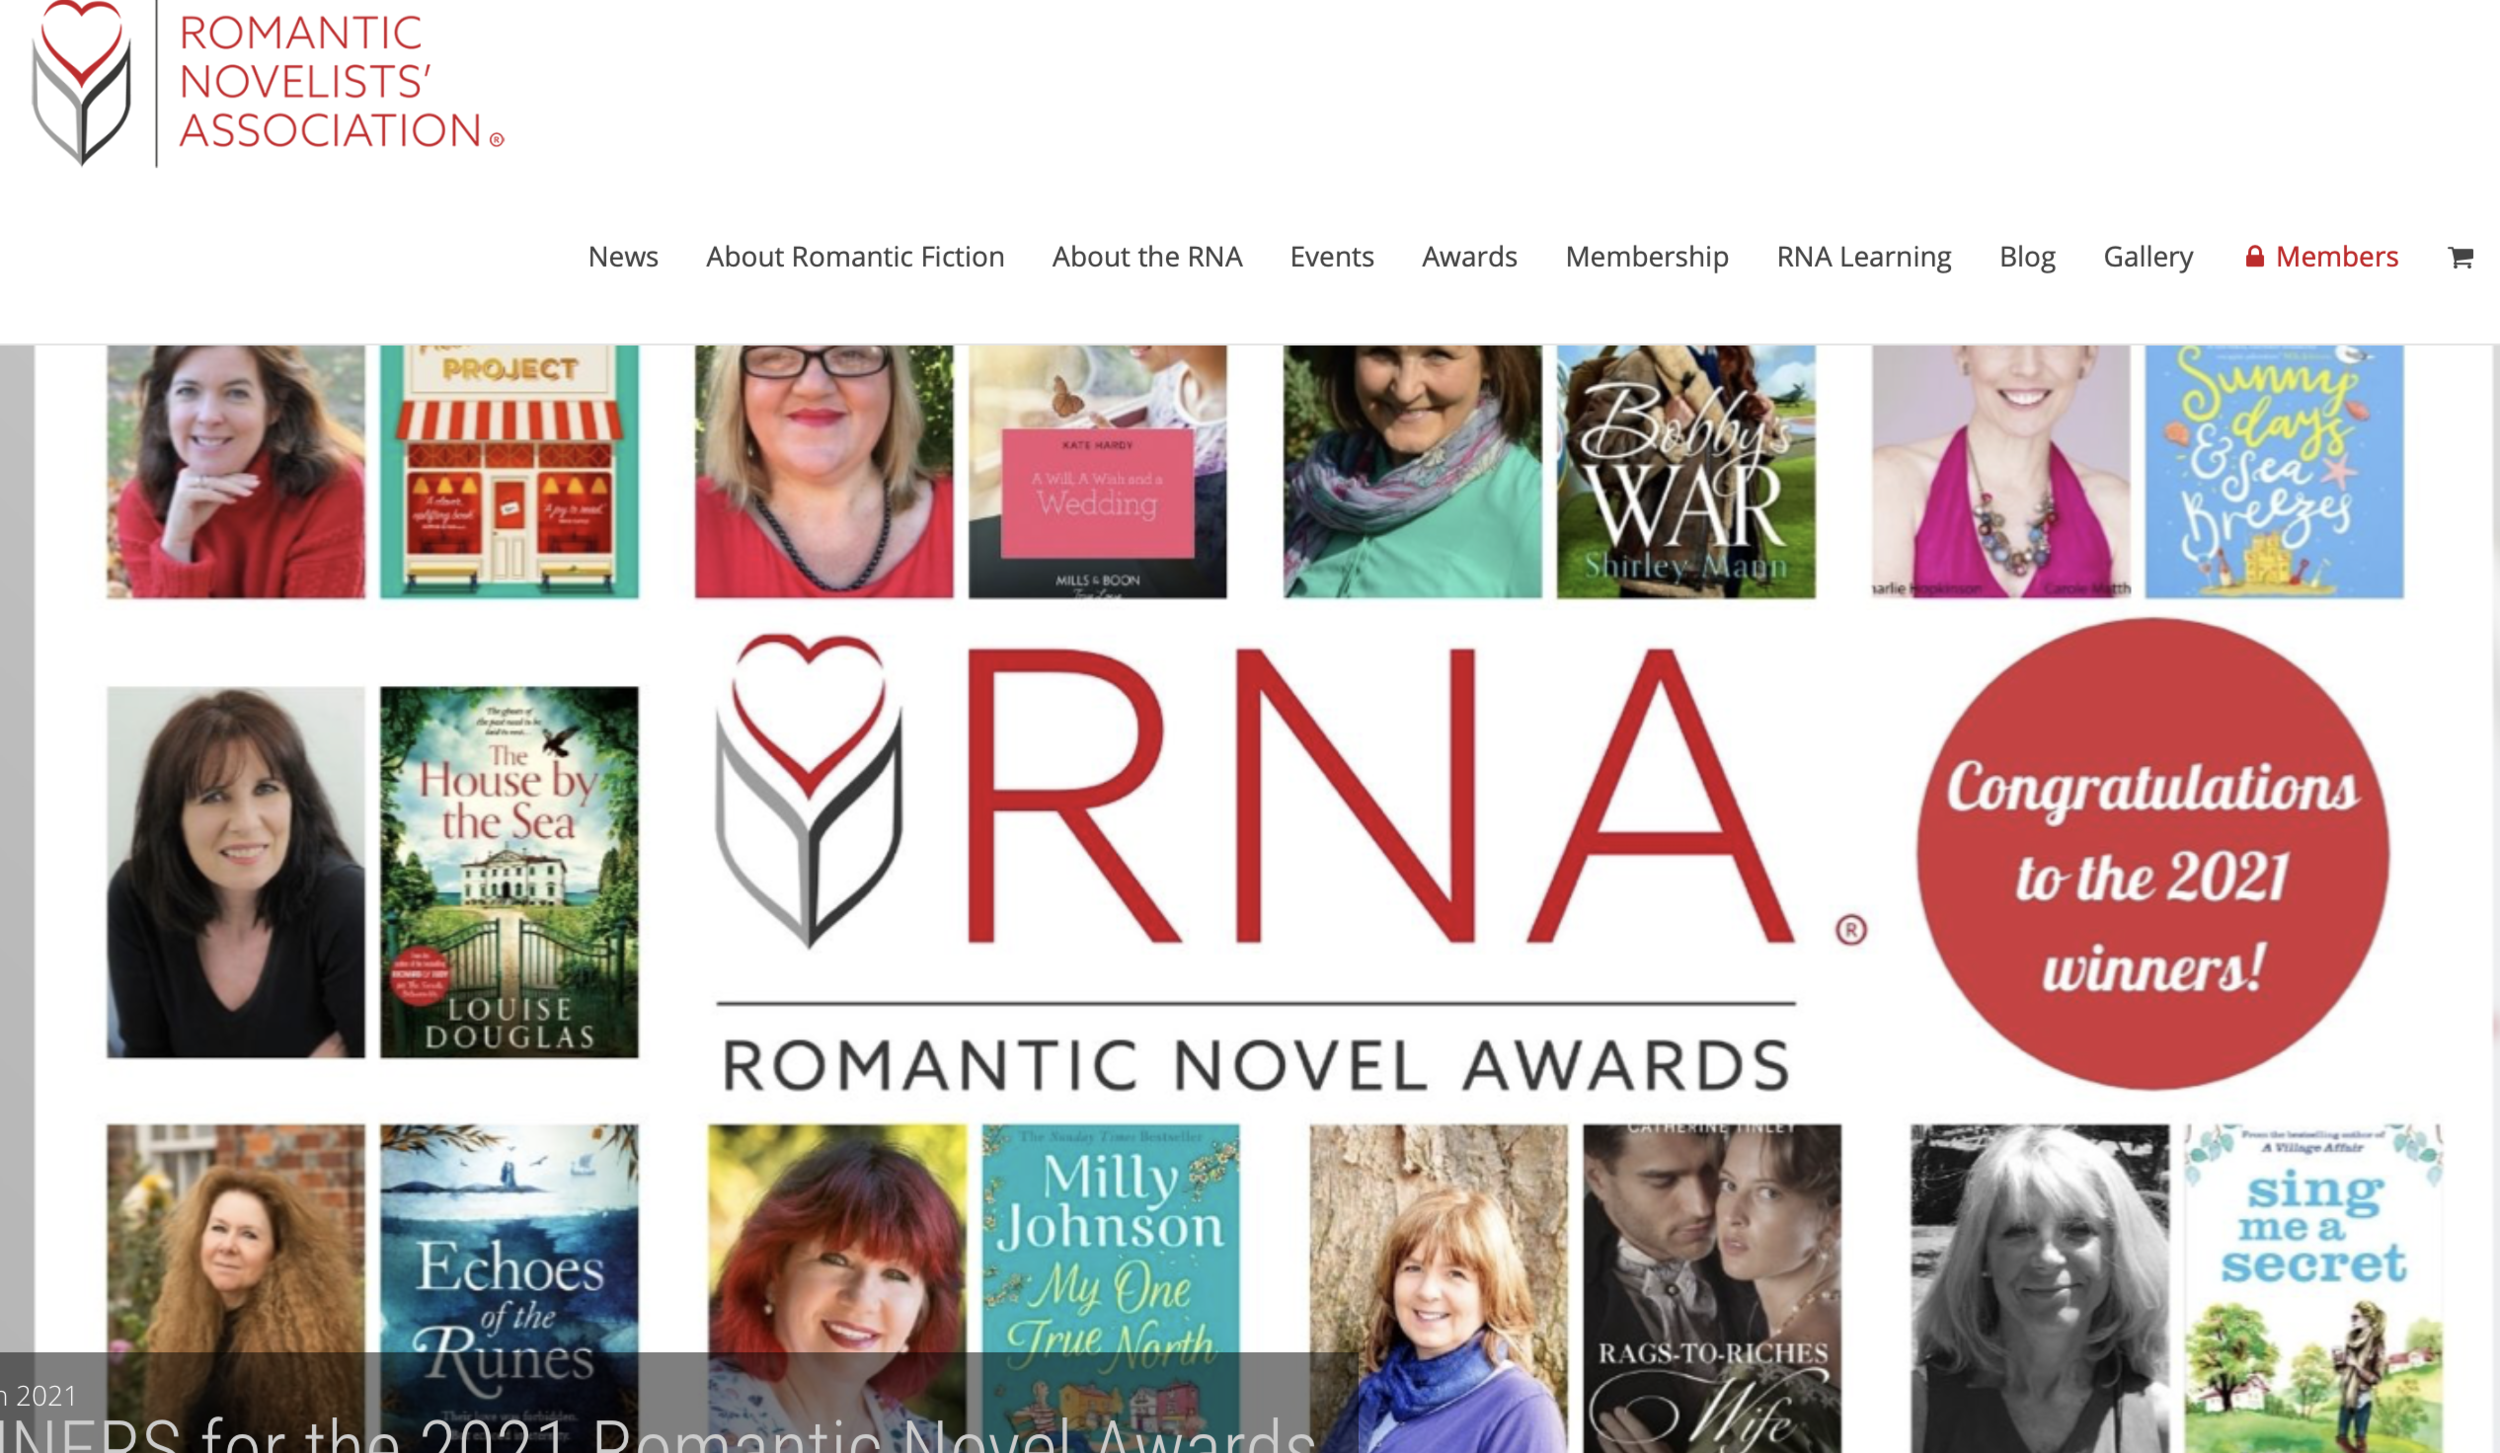 The Romantic Novelists Association